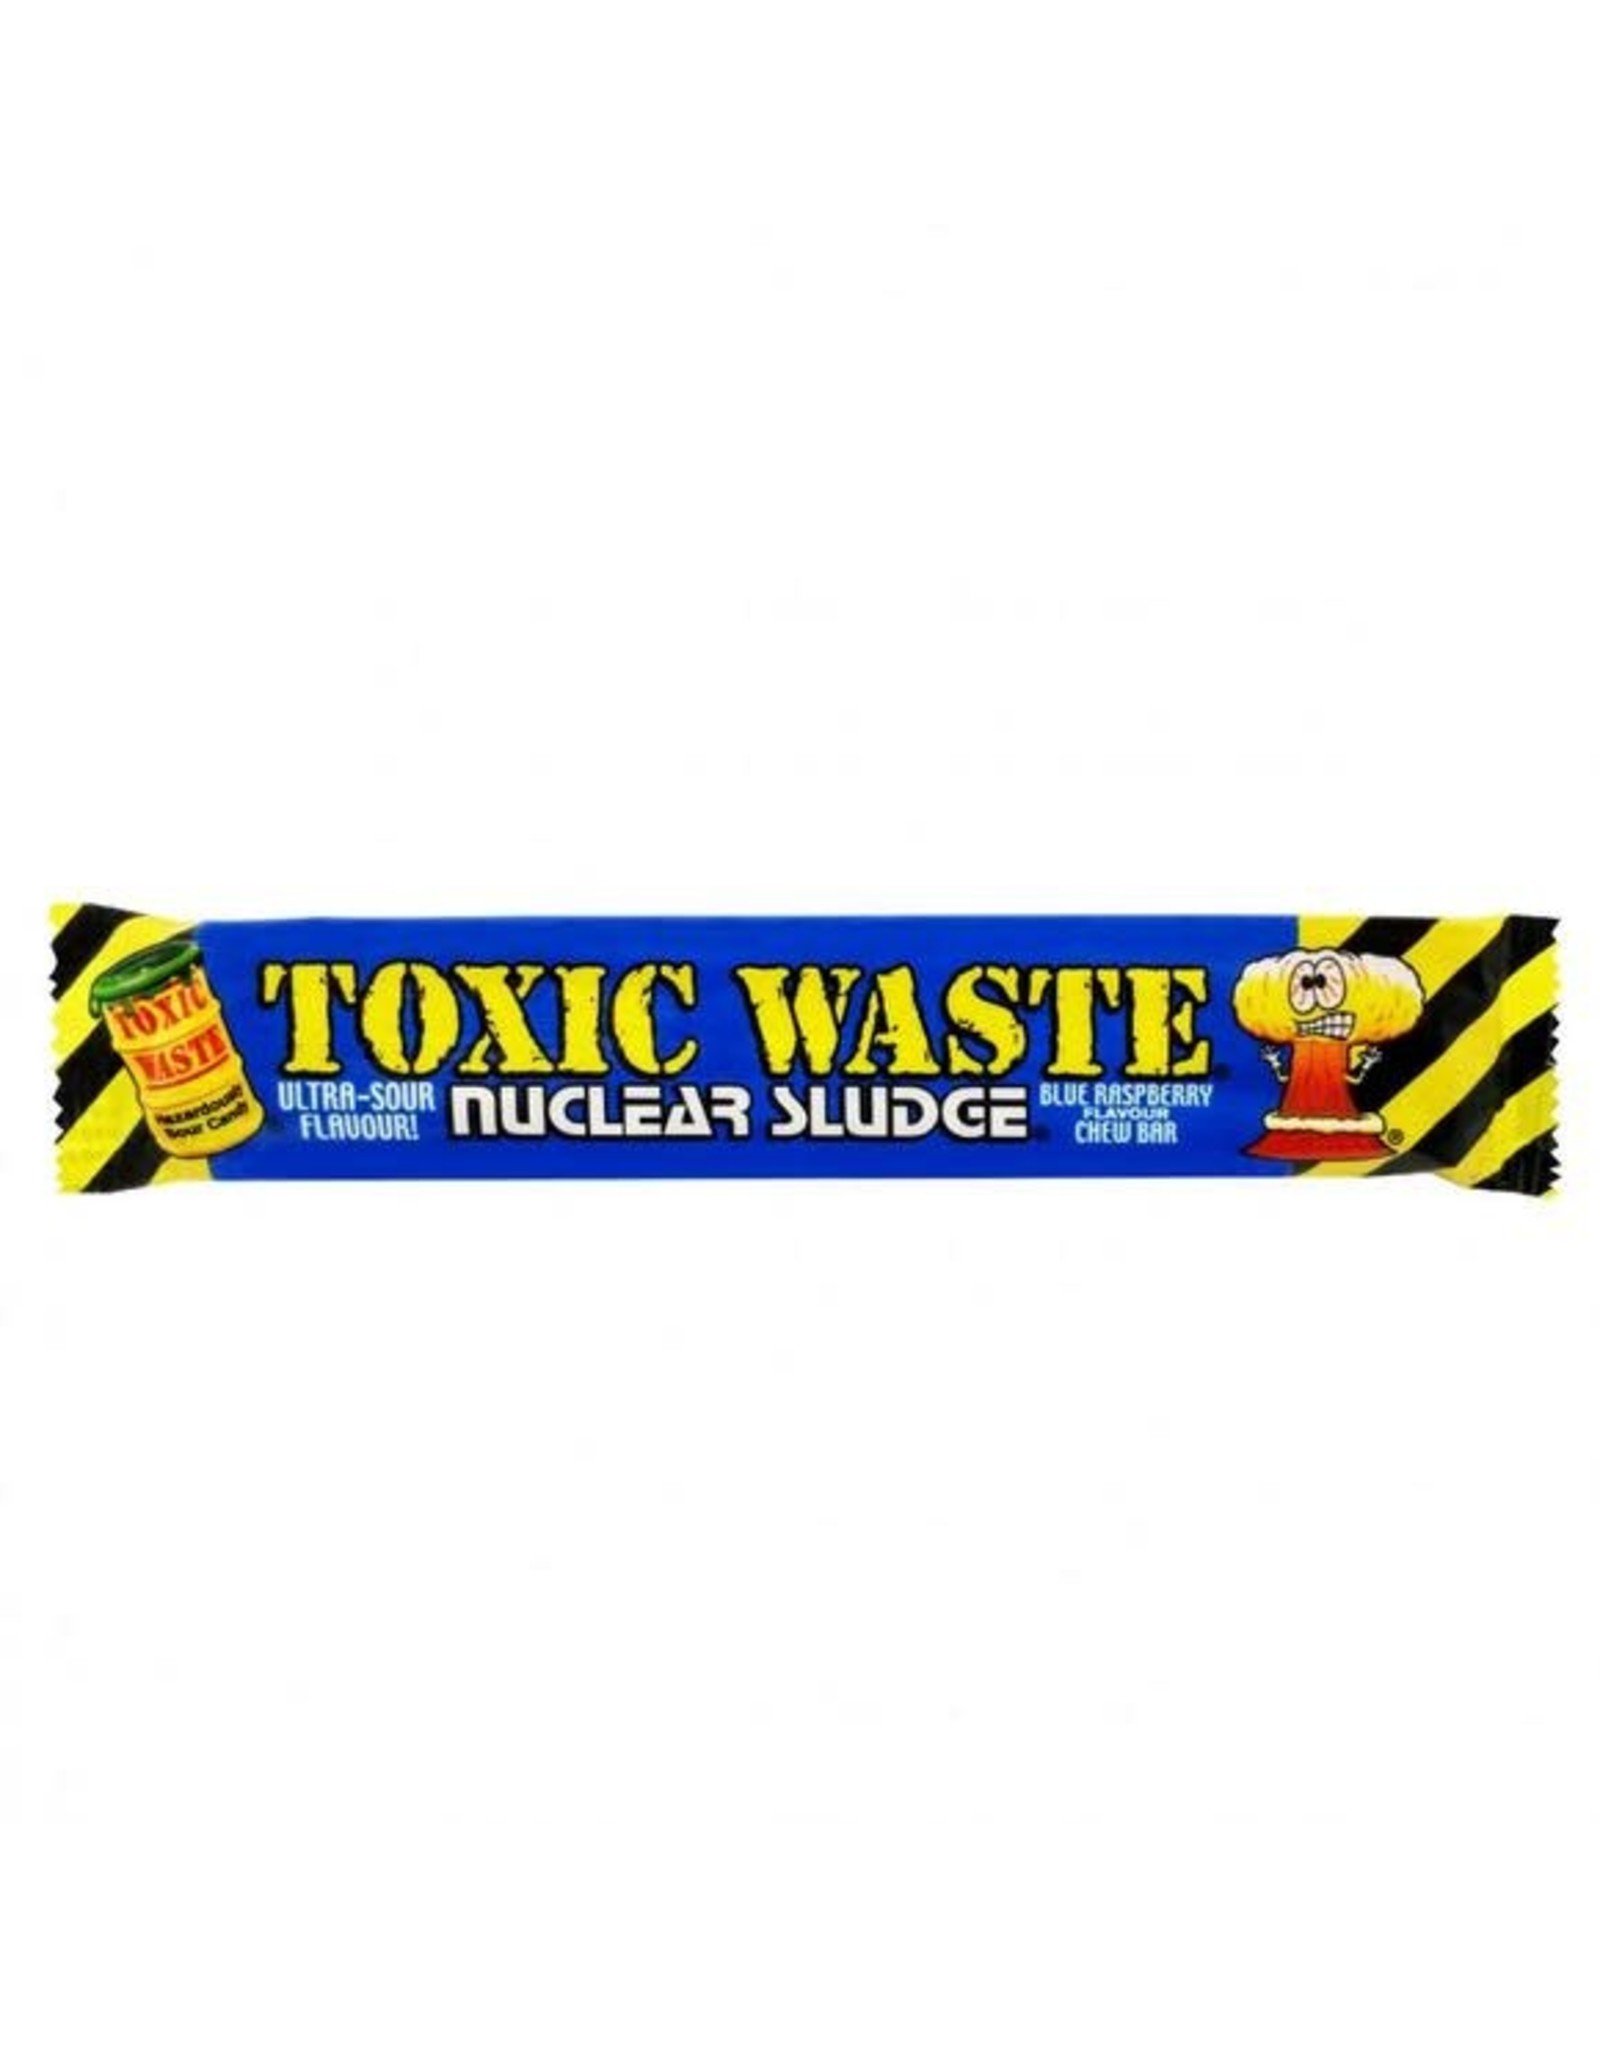 Toxic Waste - Blue Raspberry Chew Bar - 20g